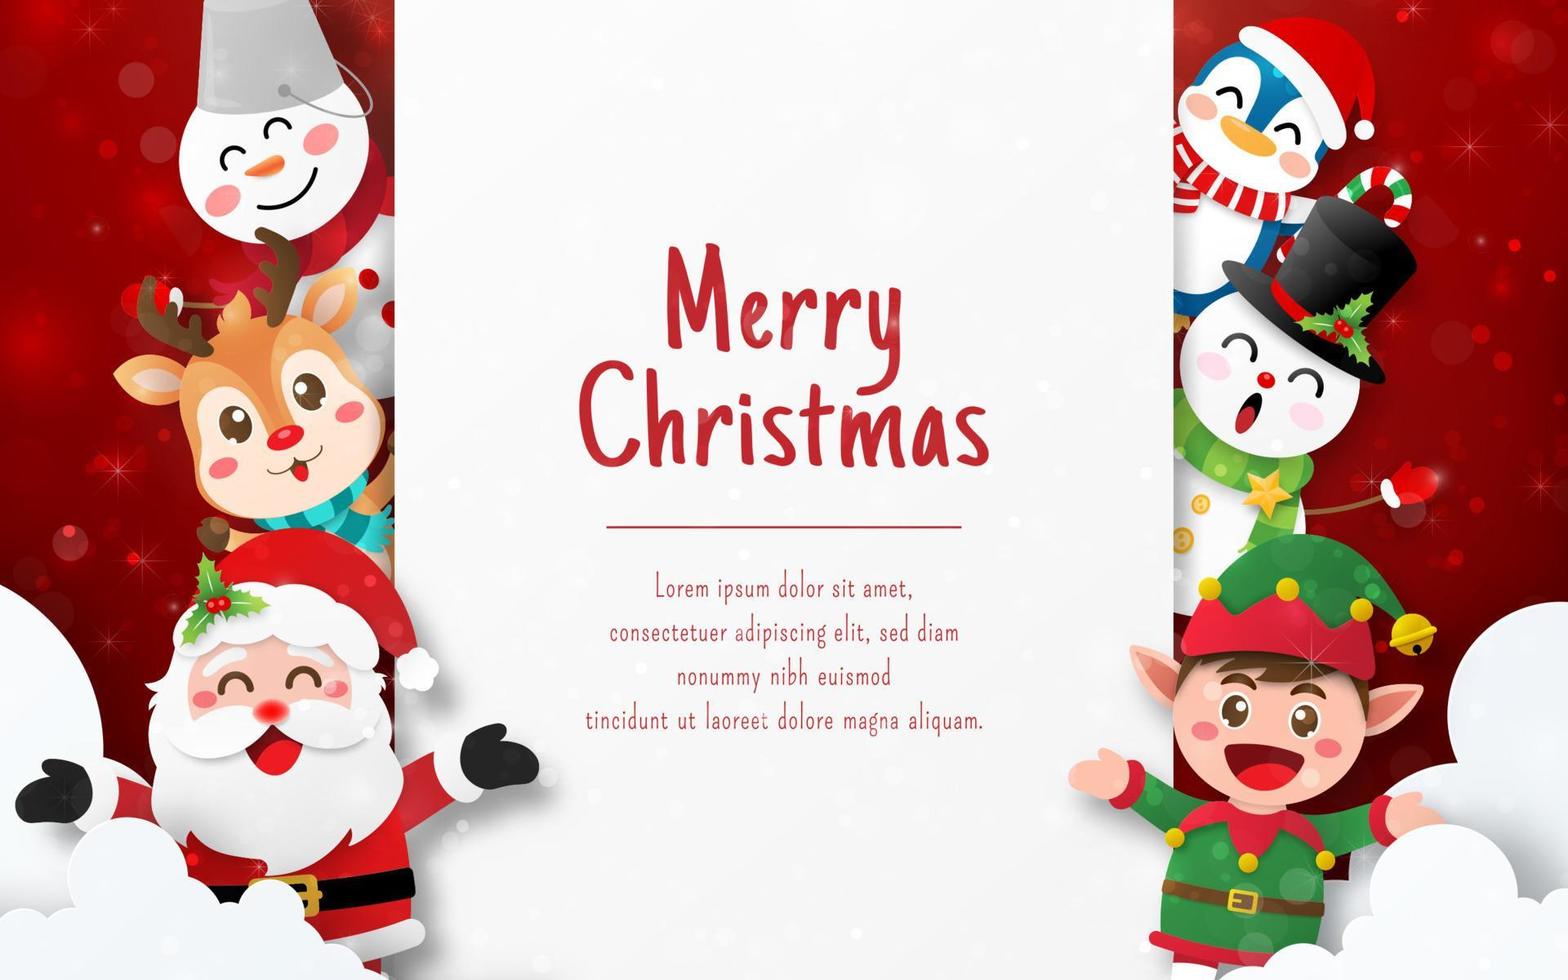 Santa Claus and friend on Christmas postcard vector